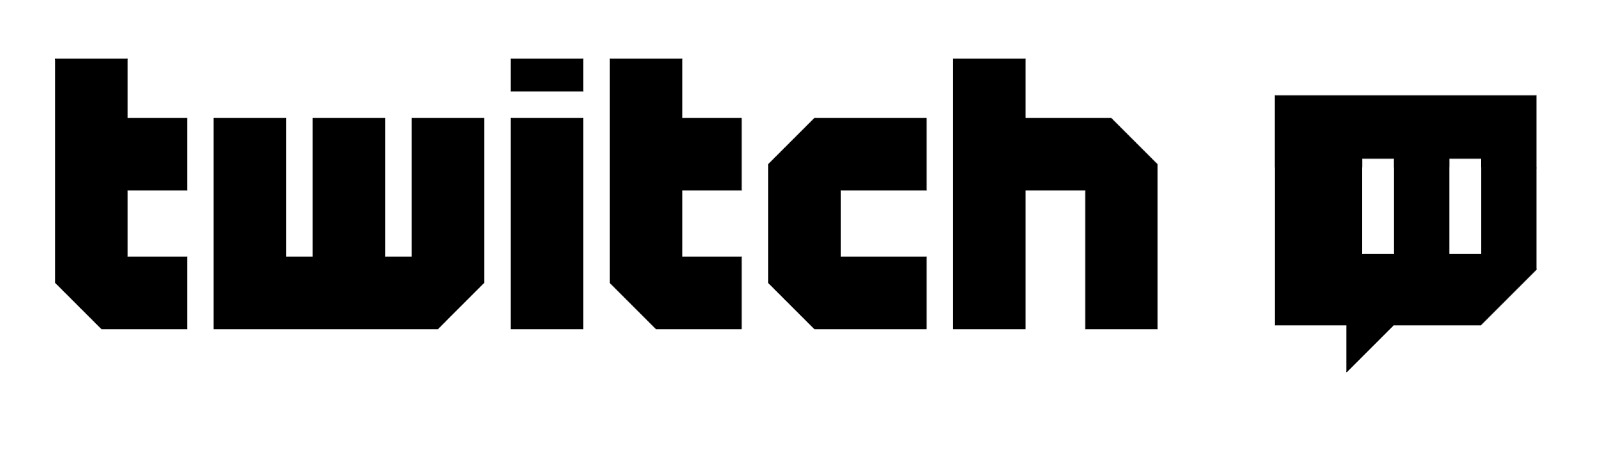 Black Twitch Logo - Black Twitch Logo Png Images